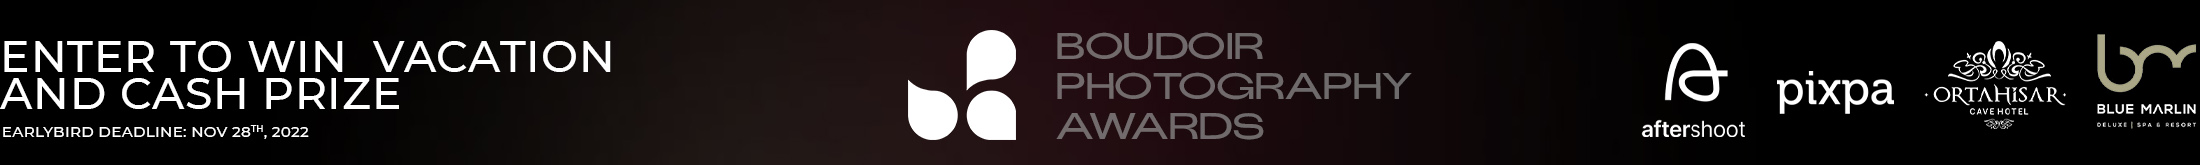 Boudoir Photography Awards 2022